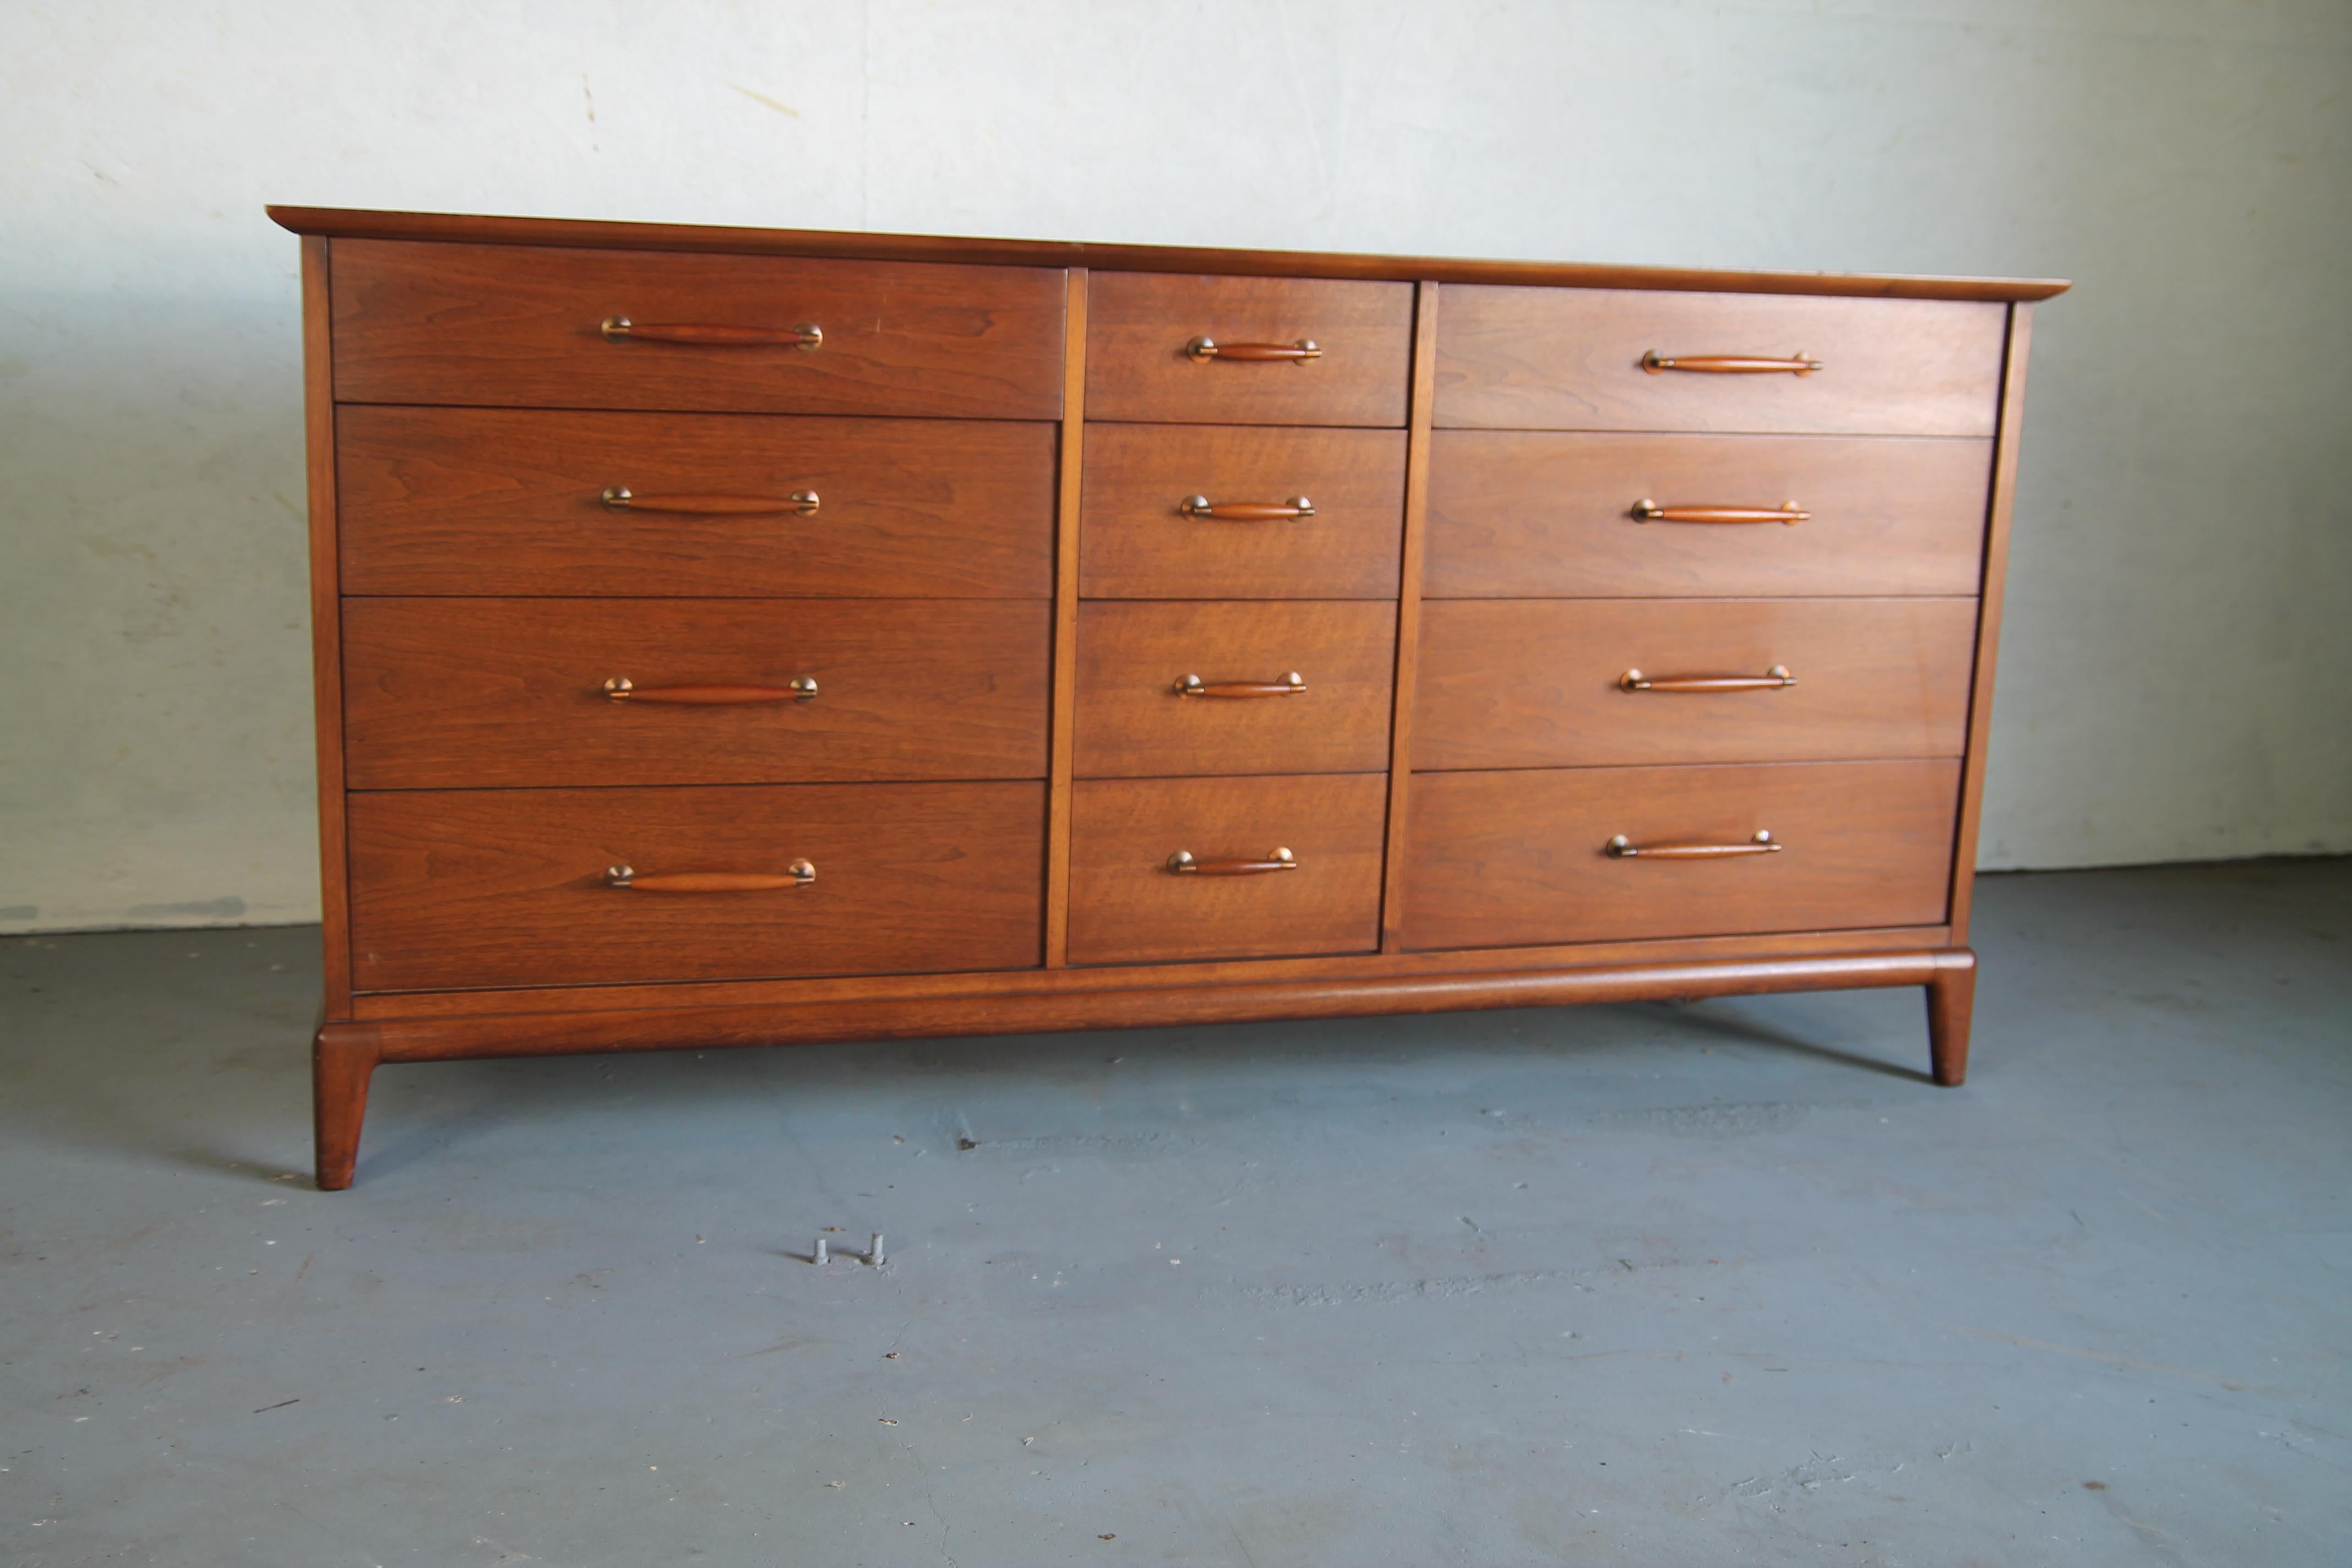 12-drawer low dresser from Heritage Henredon.